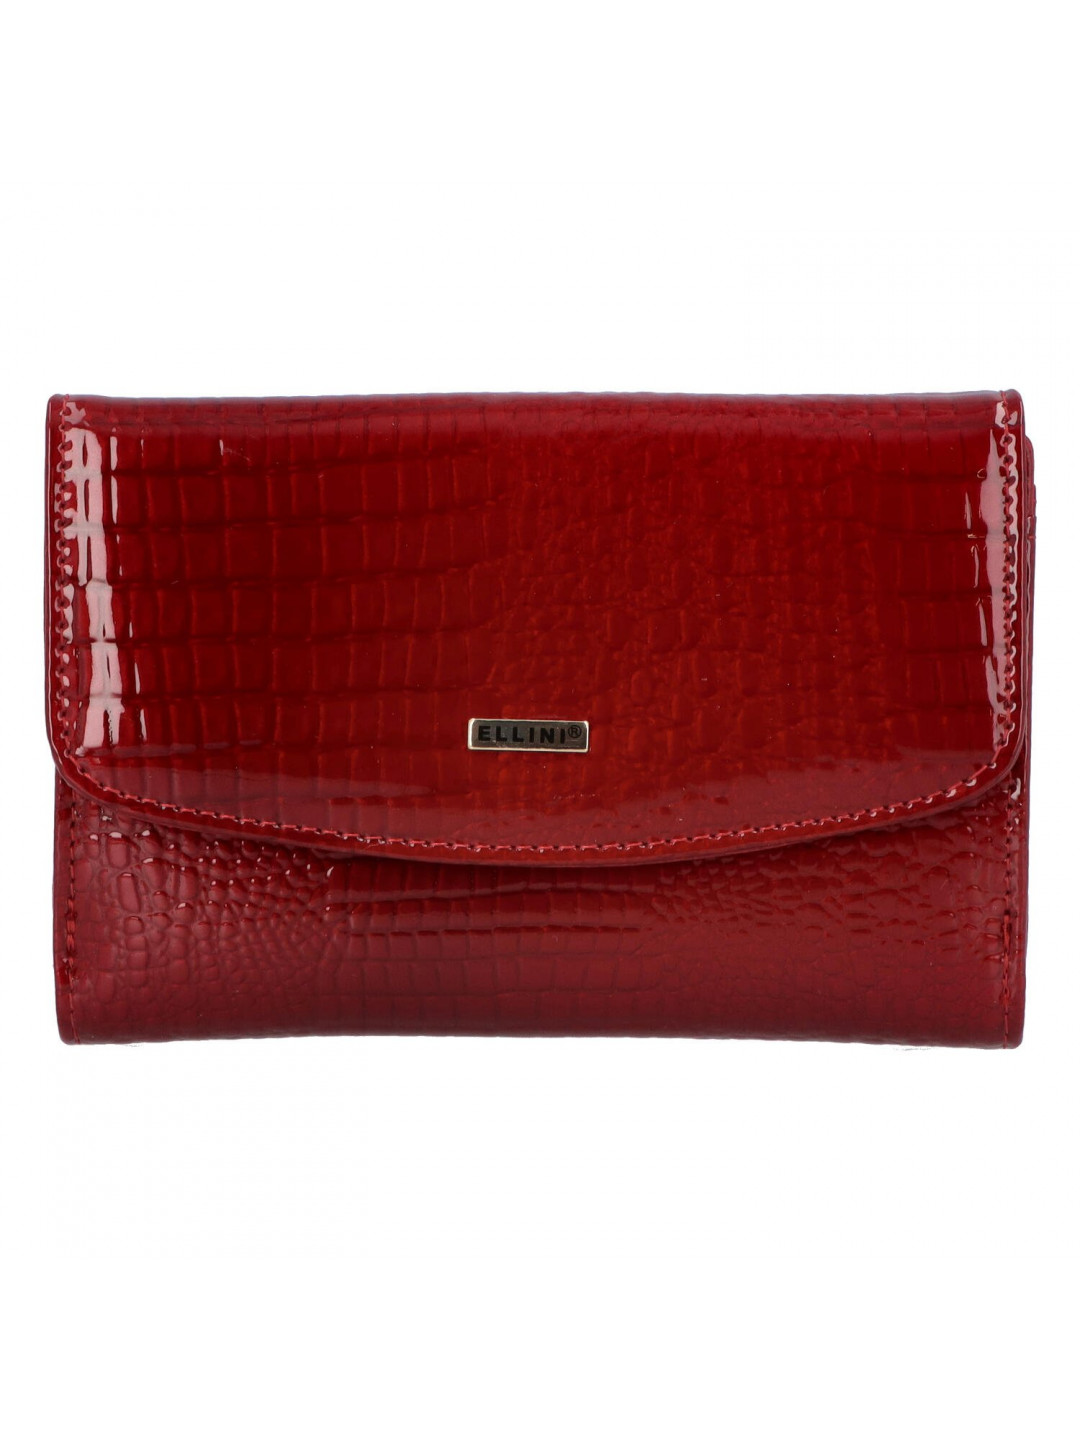 Praktická dámská kožená peněženka s velkou kapsou na drobné Kartis červená